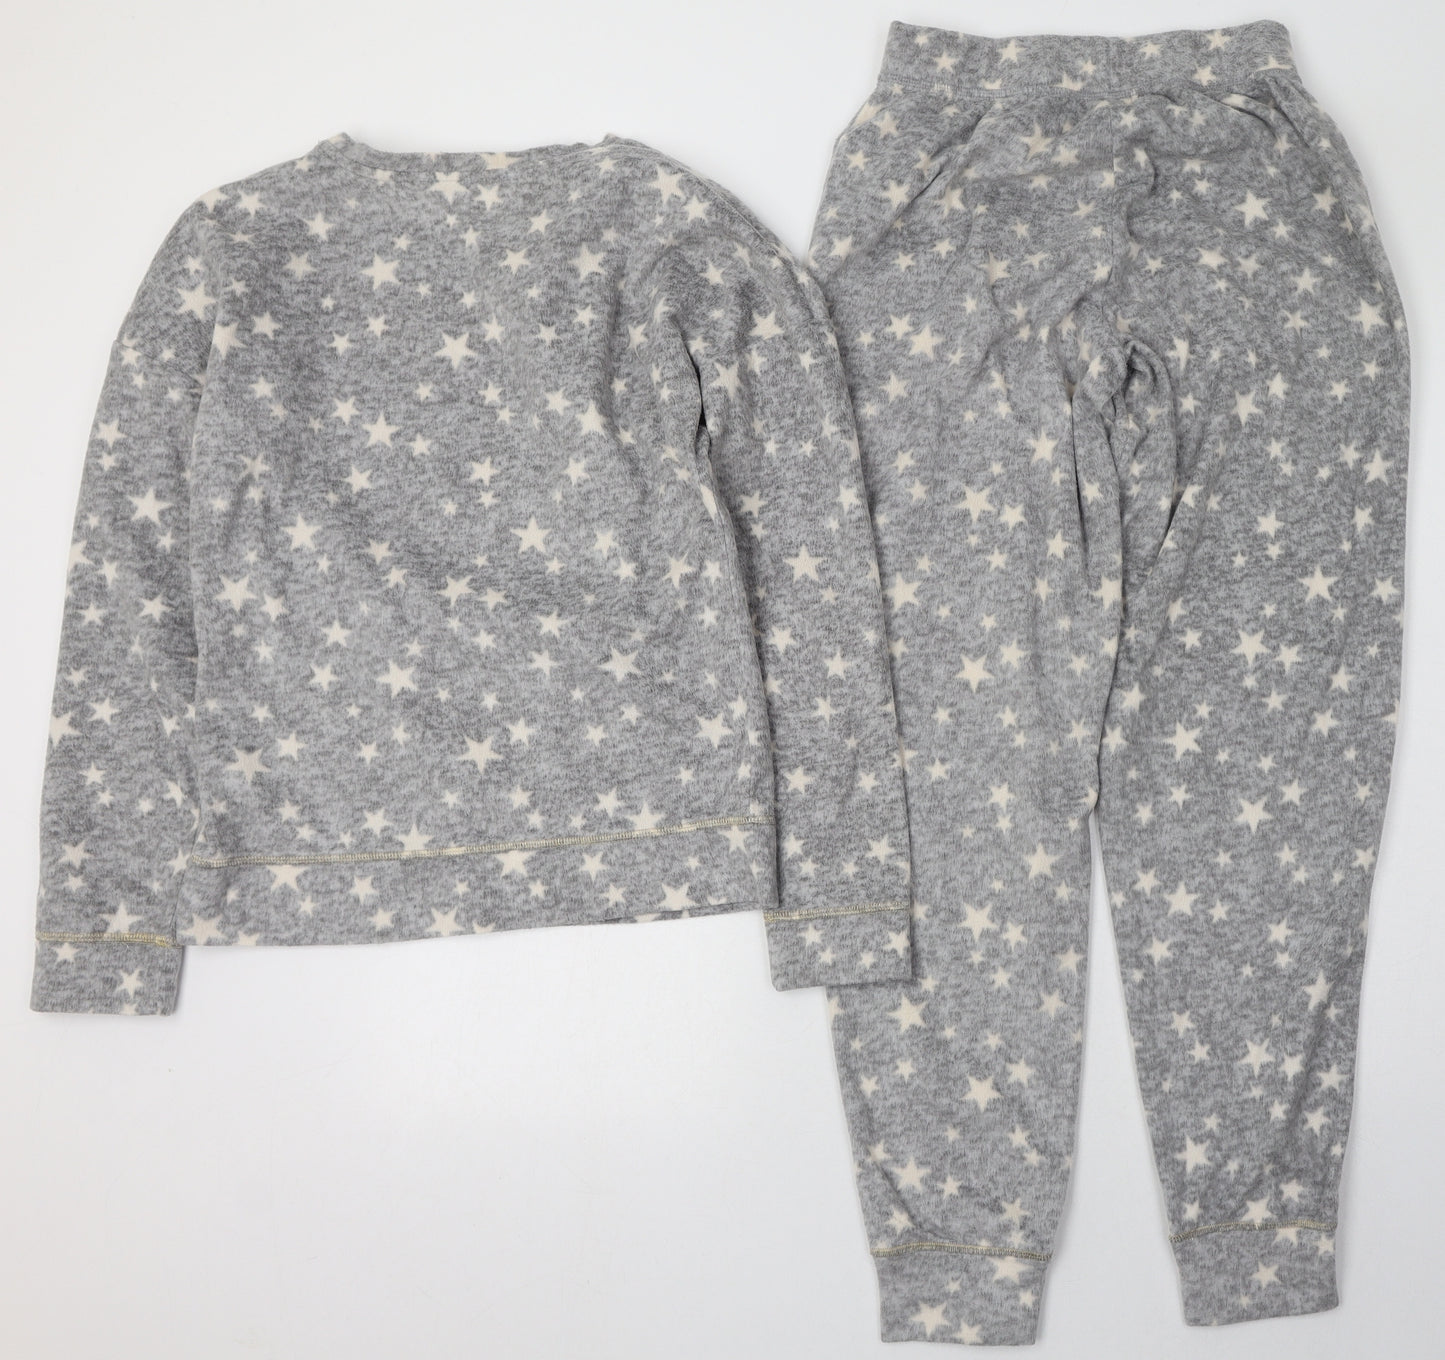 Marks and Spencer Womens Grey Geometric Polyester Cami Pyjama Set Size XS   - Star print